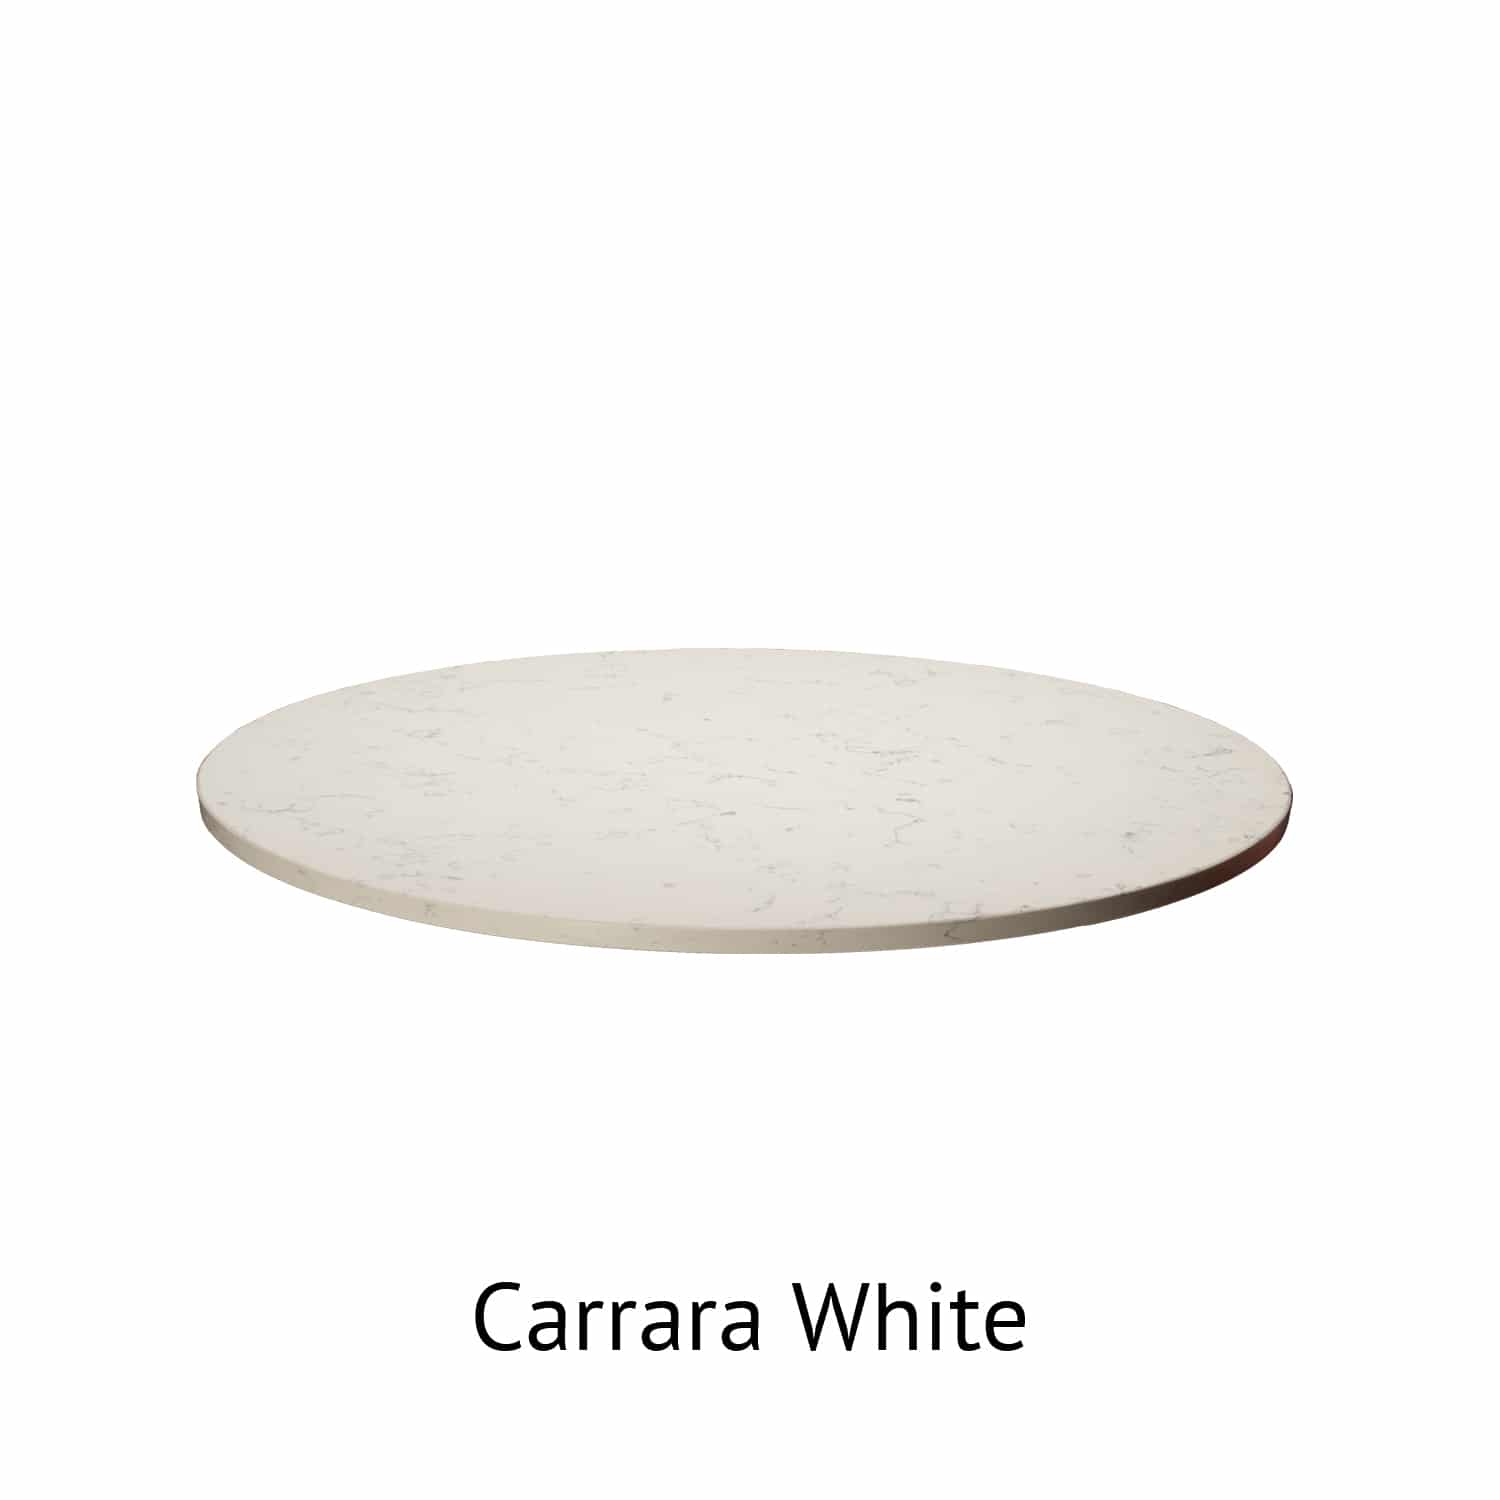 Carrara White Quartz Table Tops, 48 Inch Round Oak Table Top